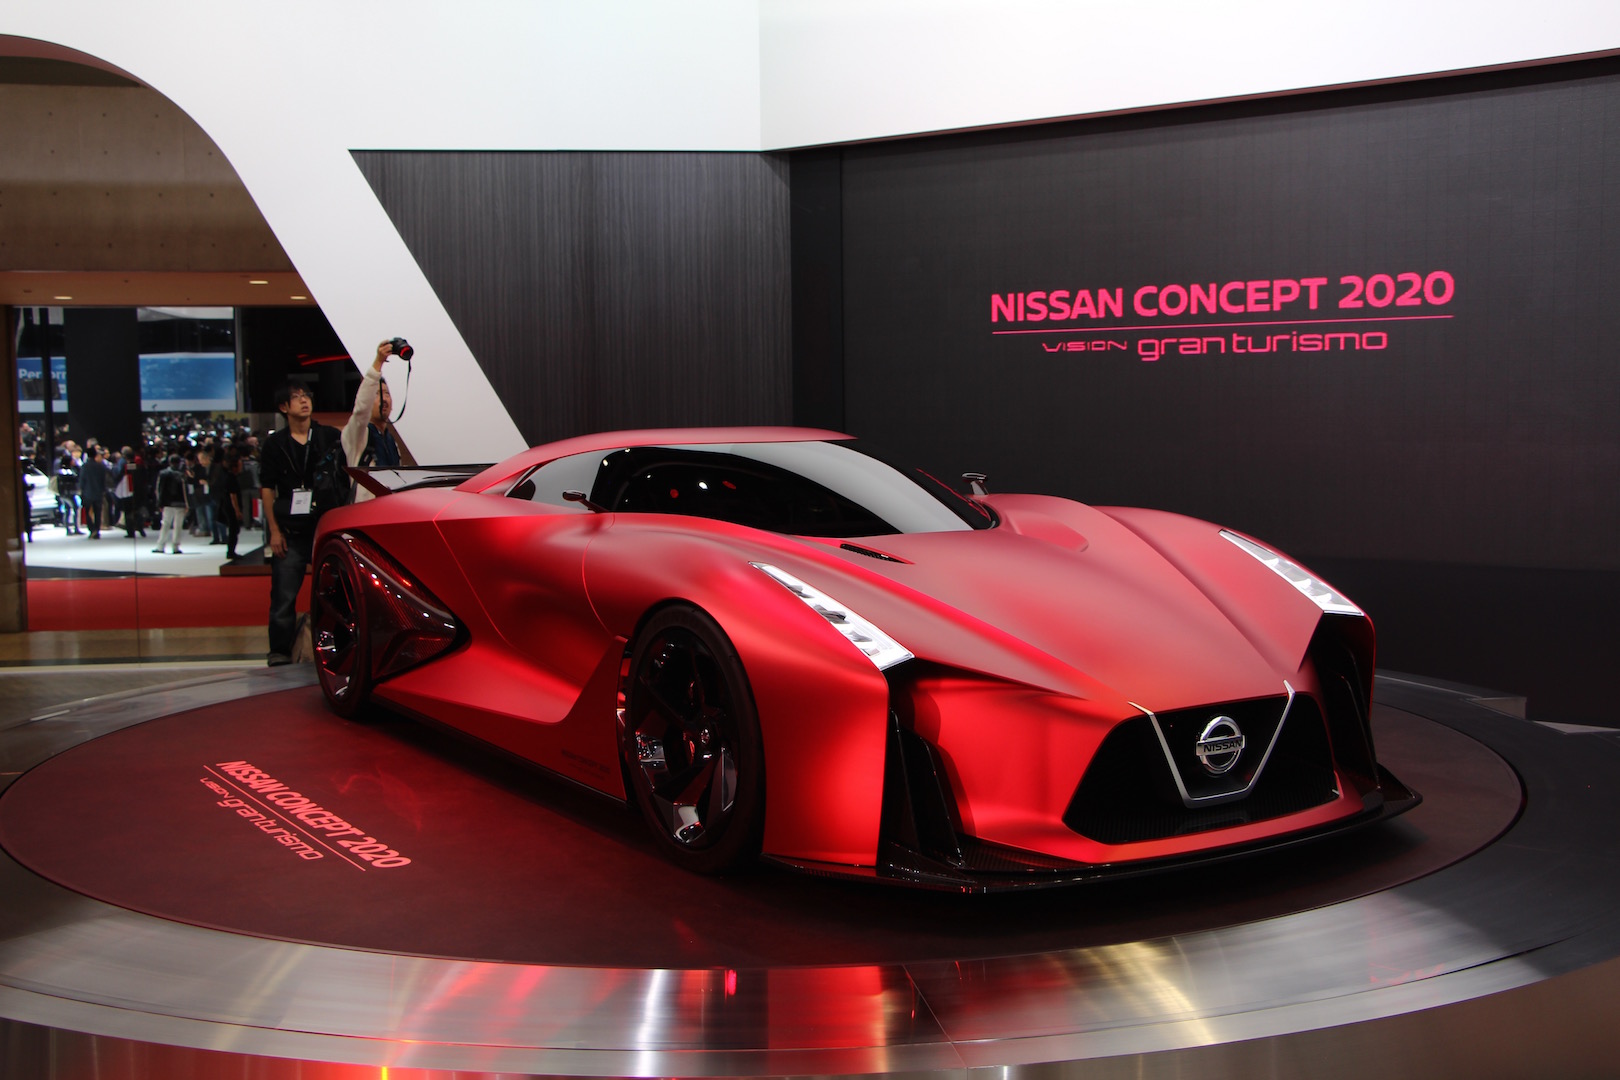 Nissan concept 2020 vision gran turismo